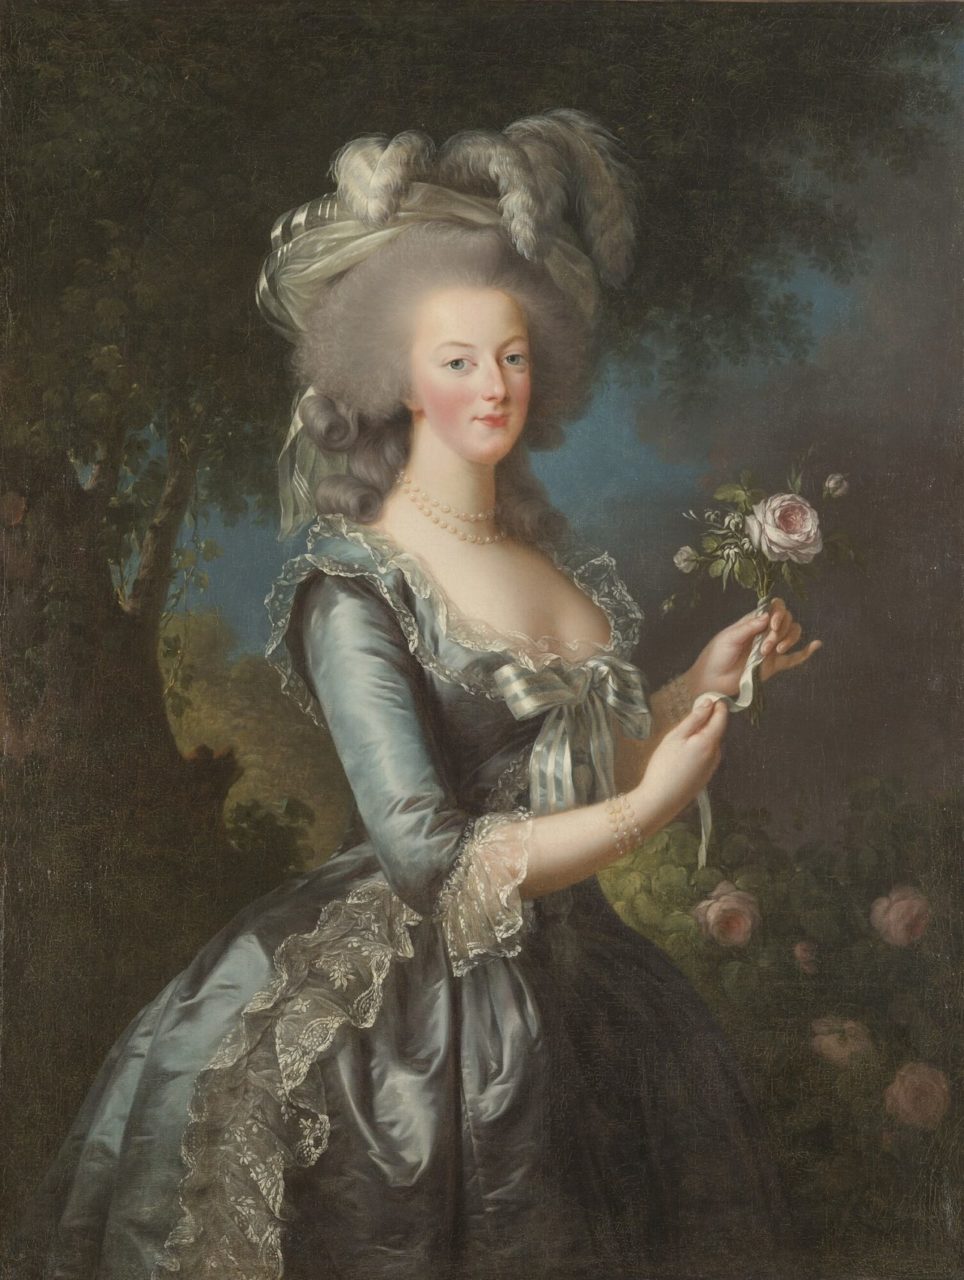 Marie Antoinette, Queen of France (1755-1793)